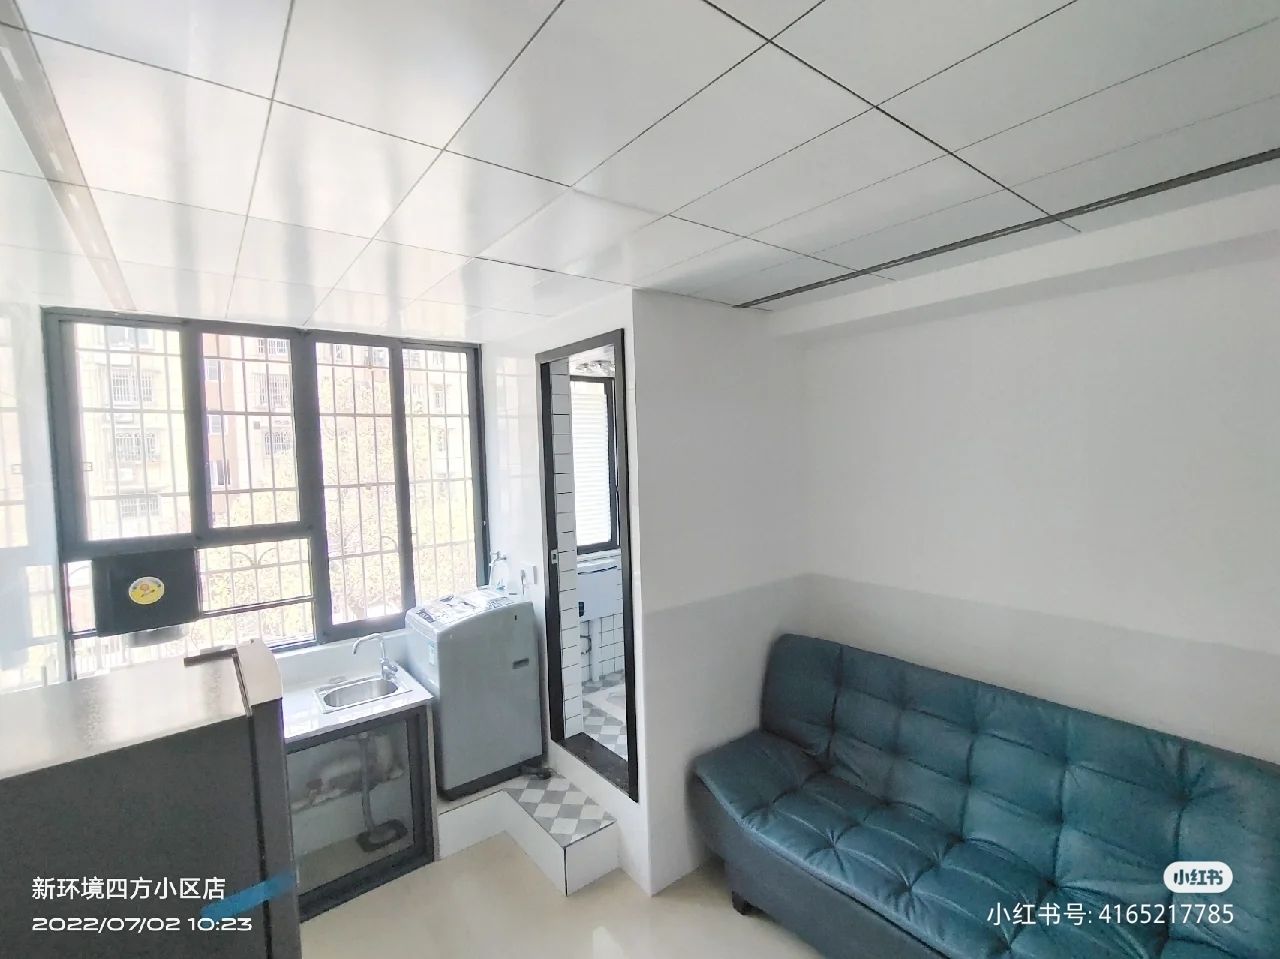 Changsha-Kaifu-Shared Apartment